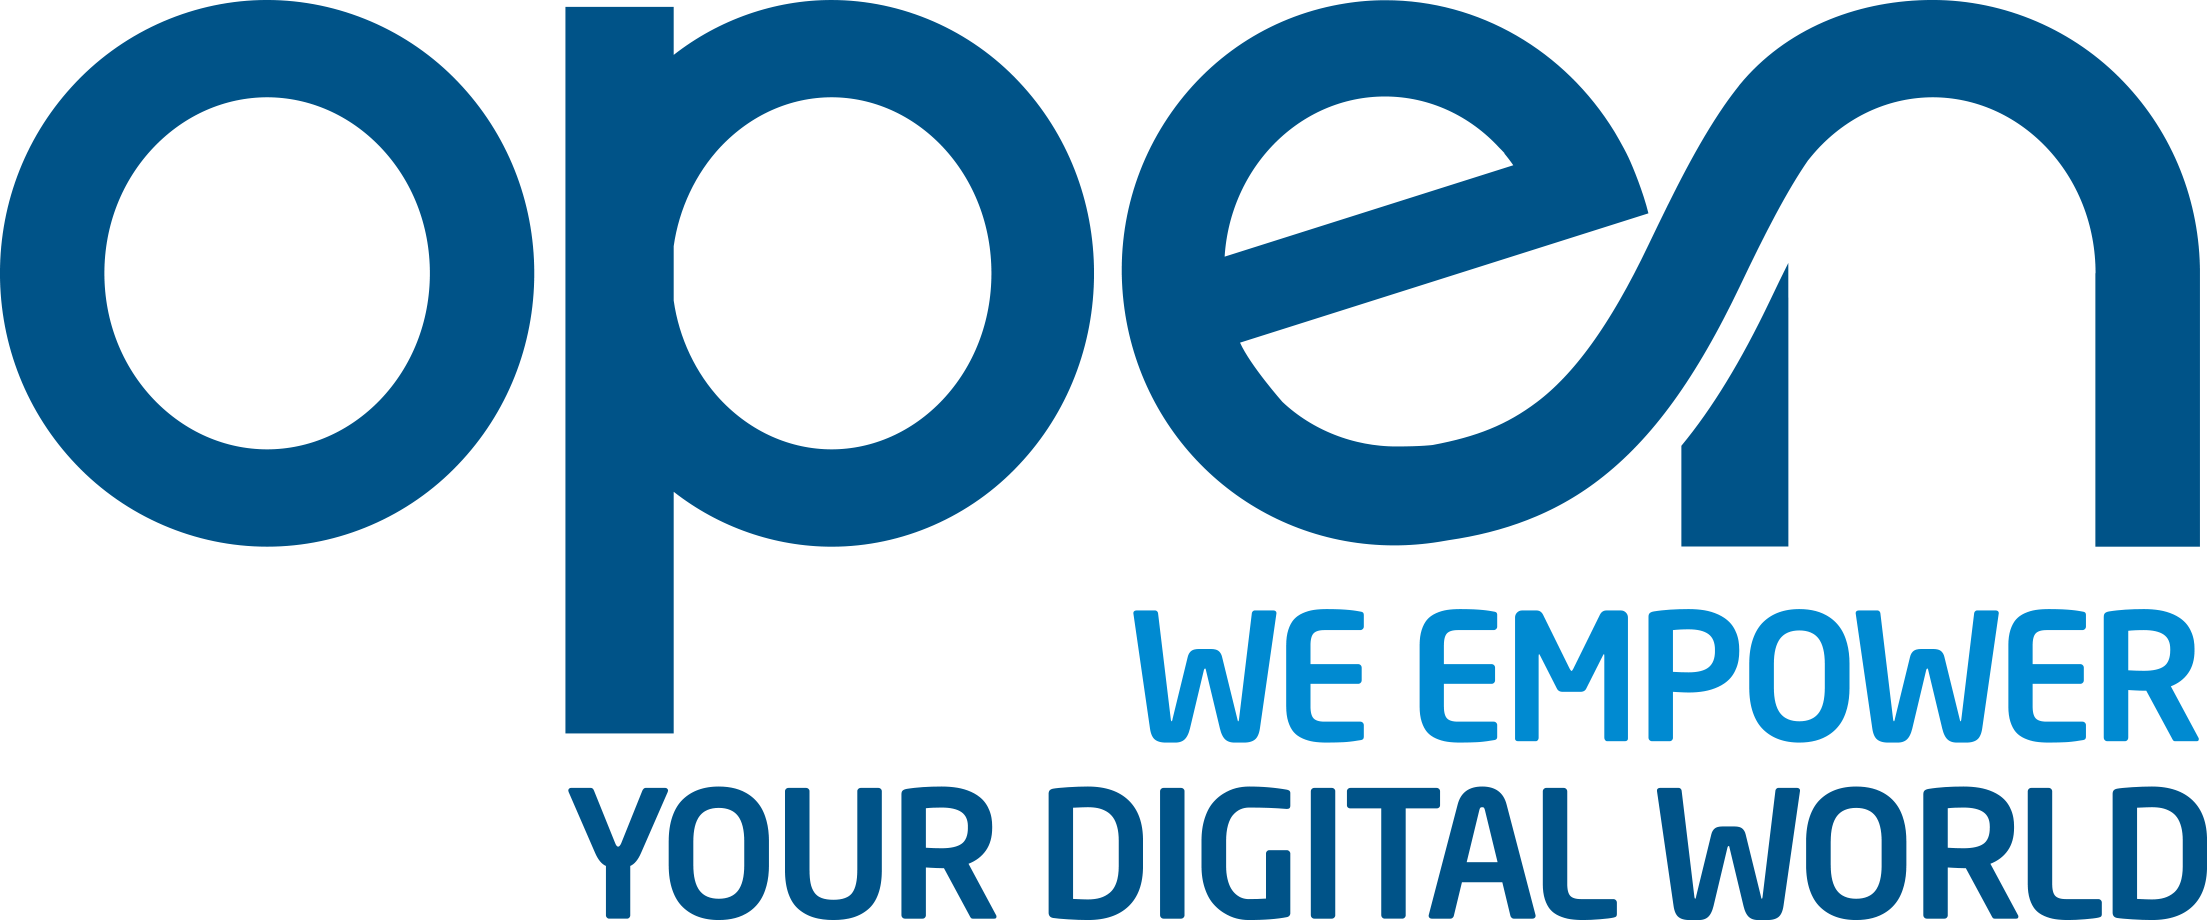 open - we empower your digital world